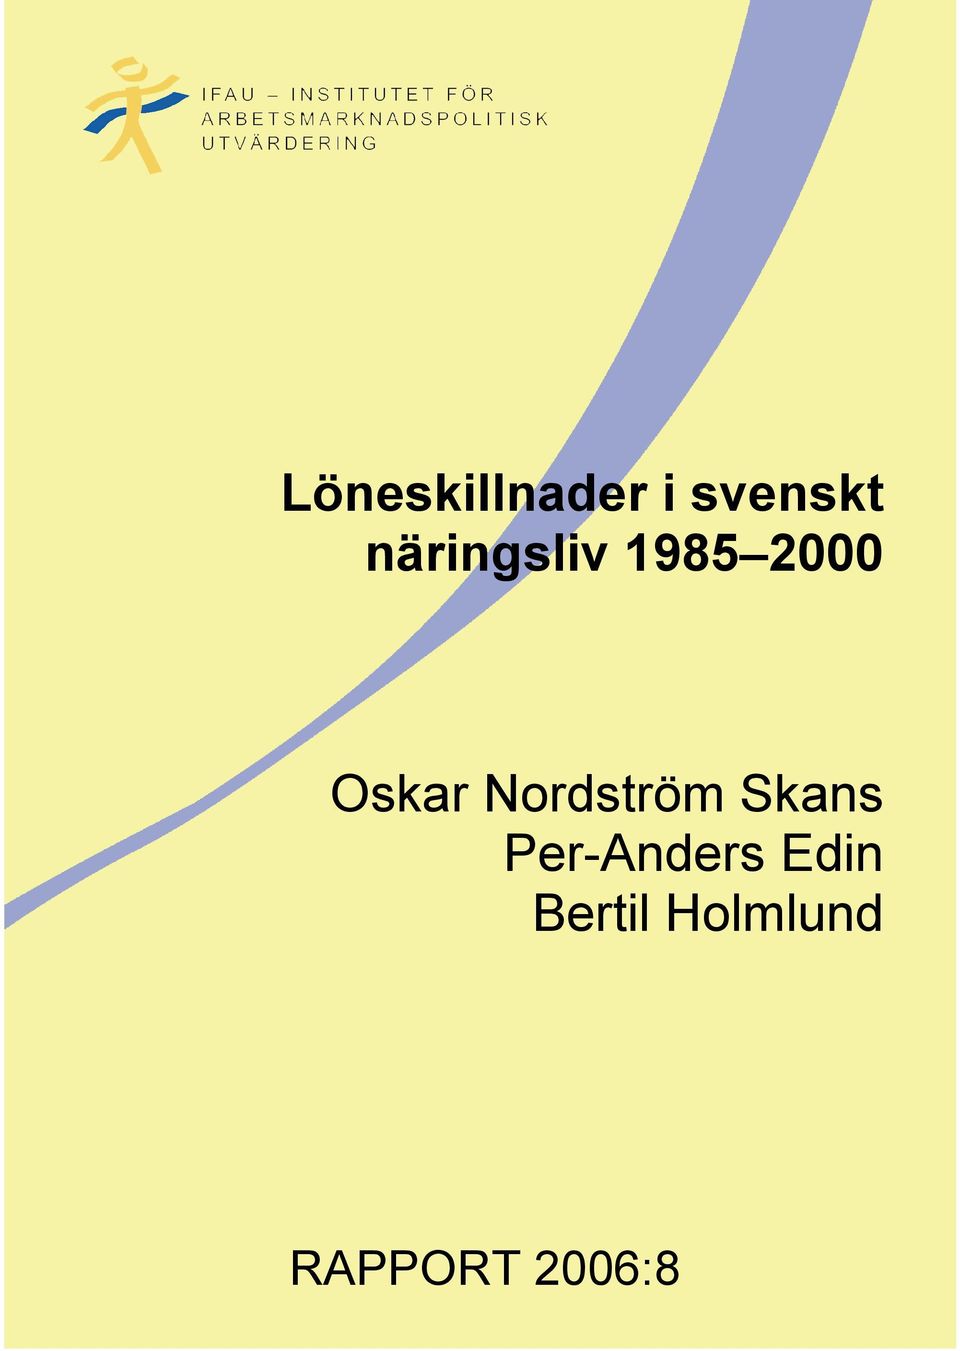 Nordström Skans Per-Anders